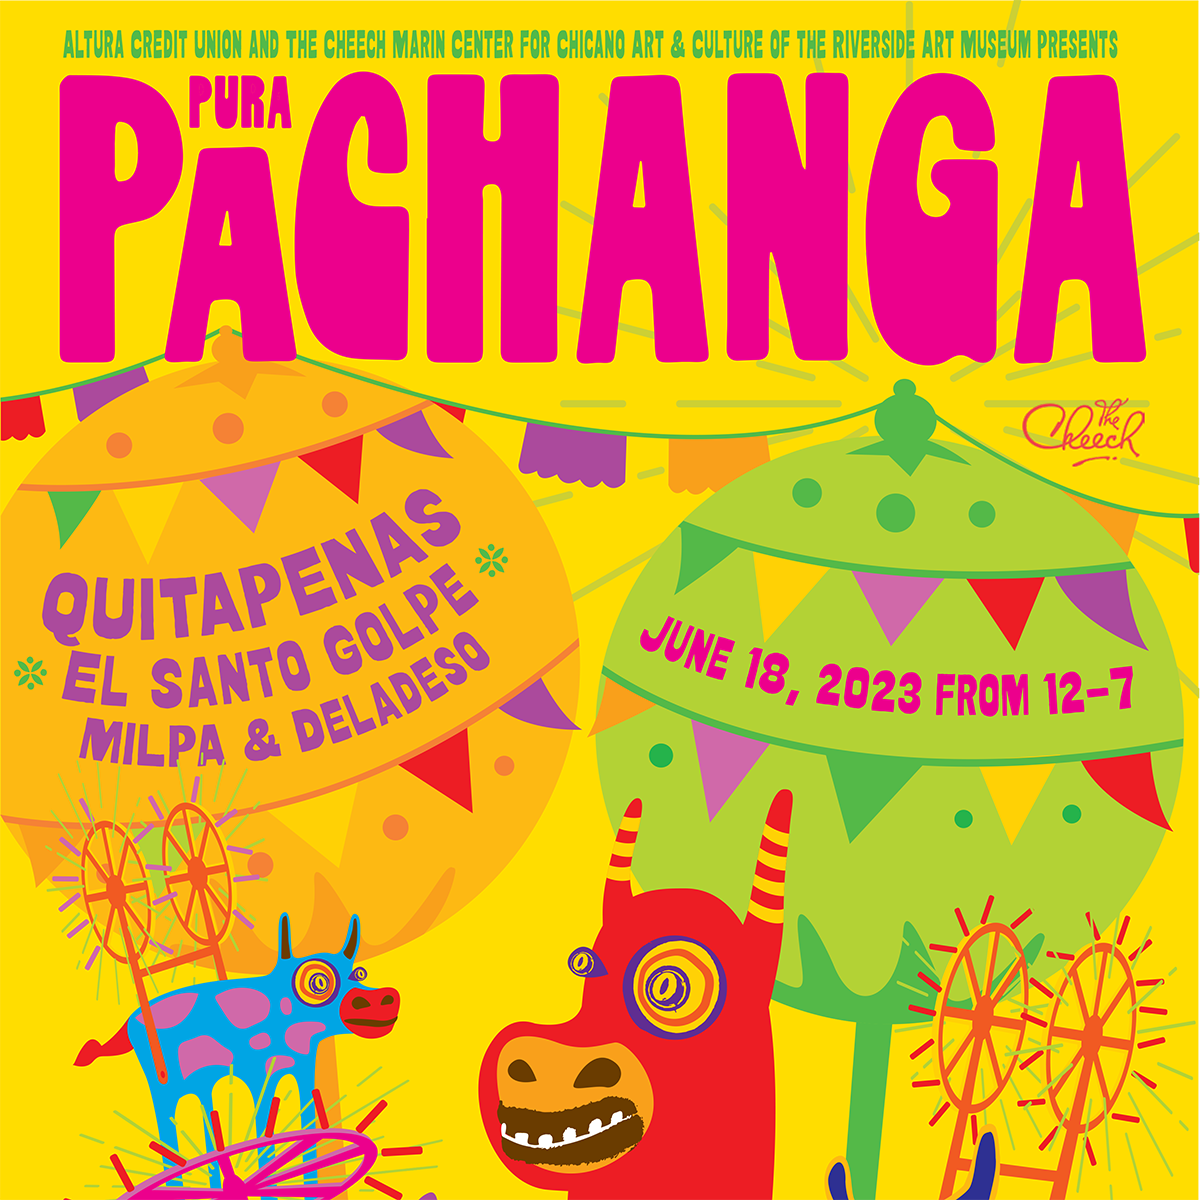 FREE “Pura Pachanga” Community Festival